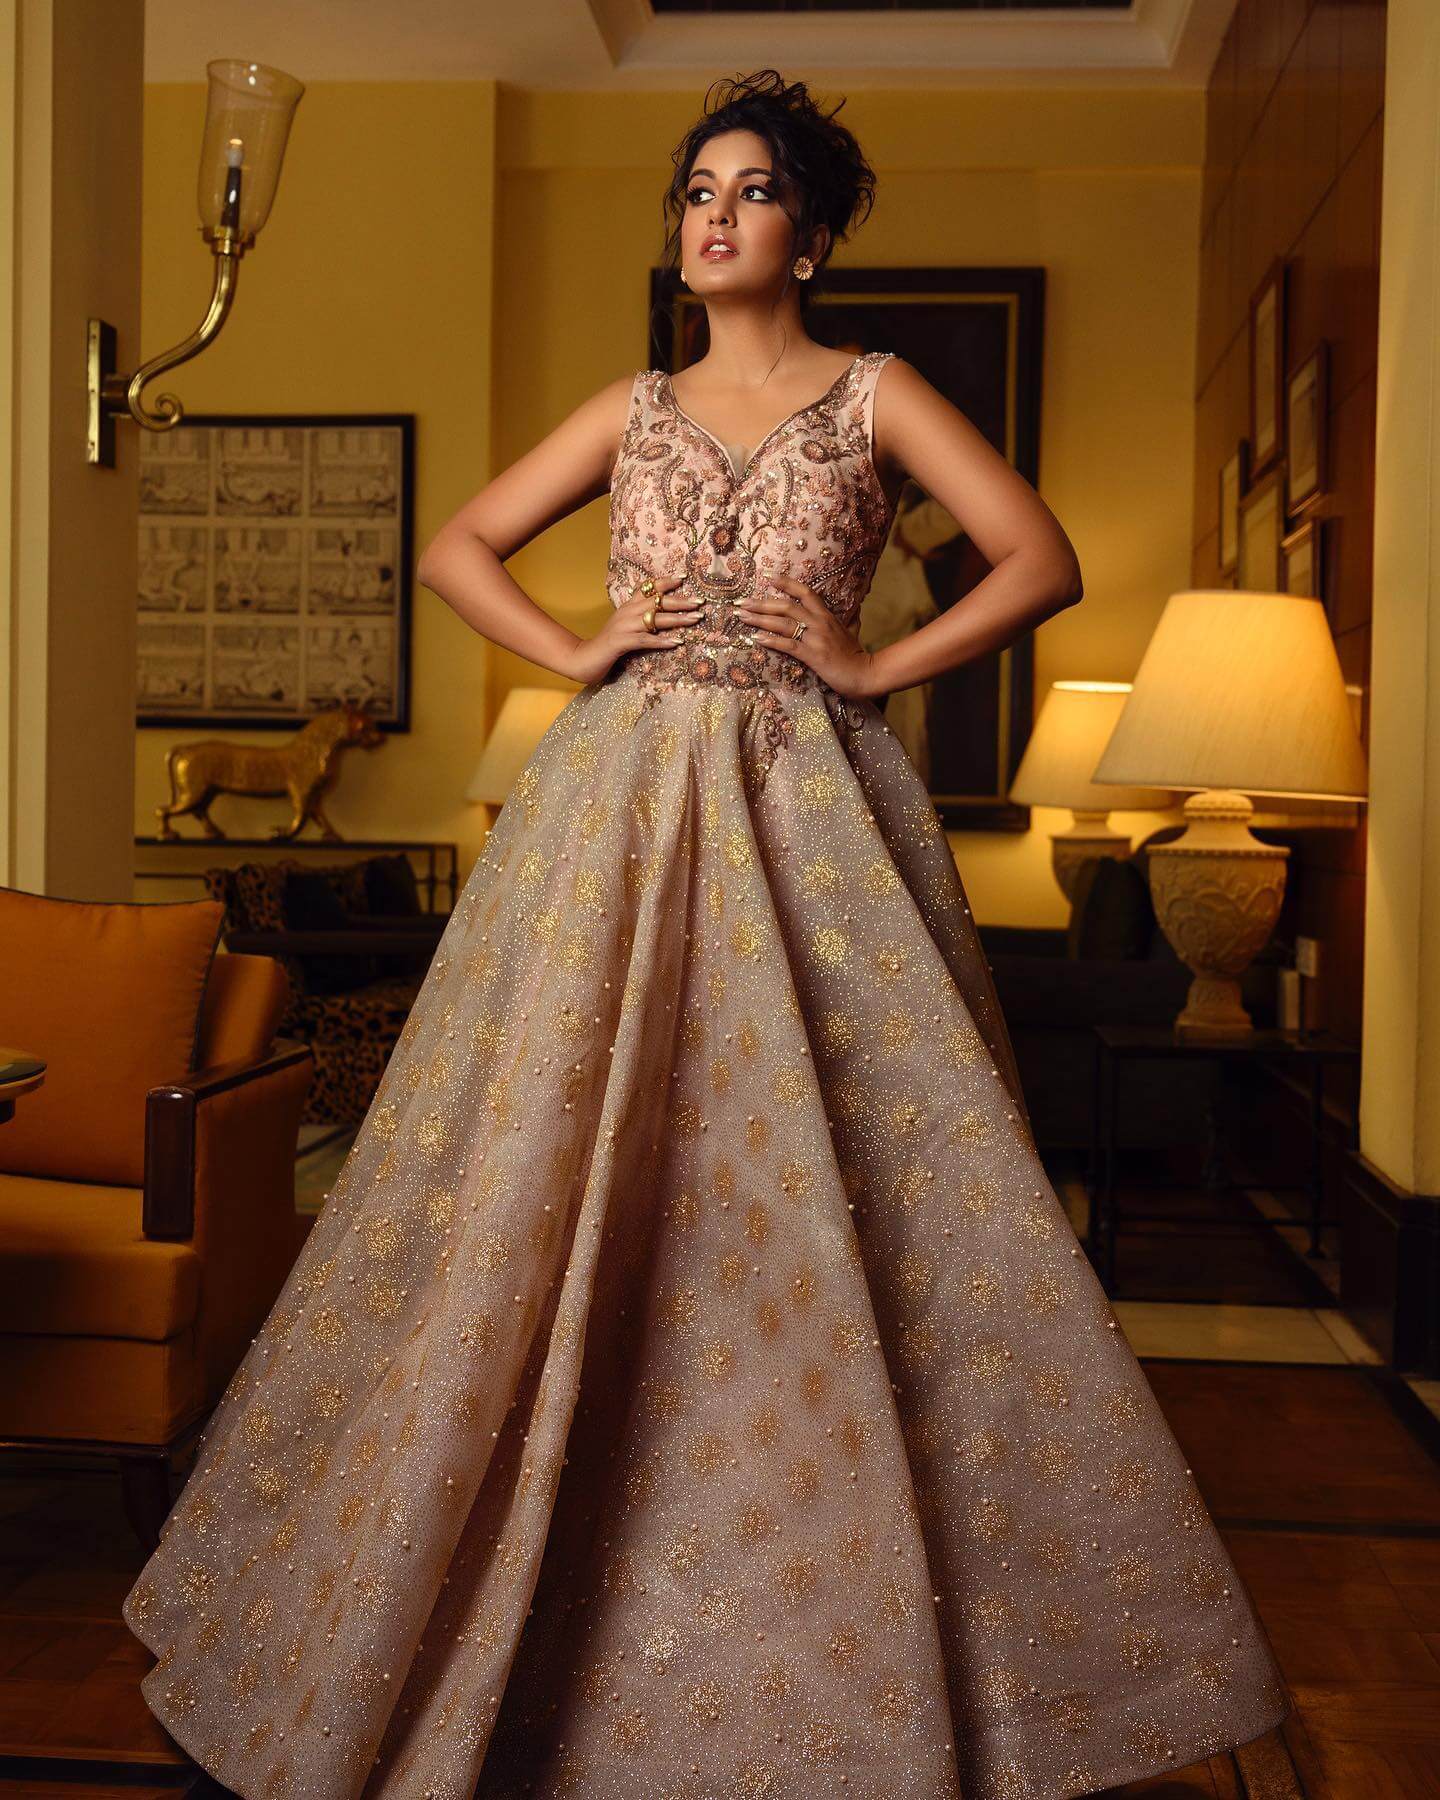 Ishita Dutta Princess Look In Cinderella Gown